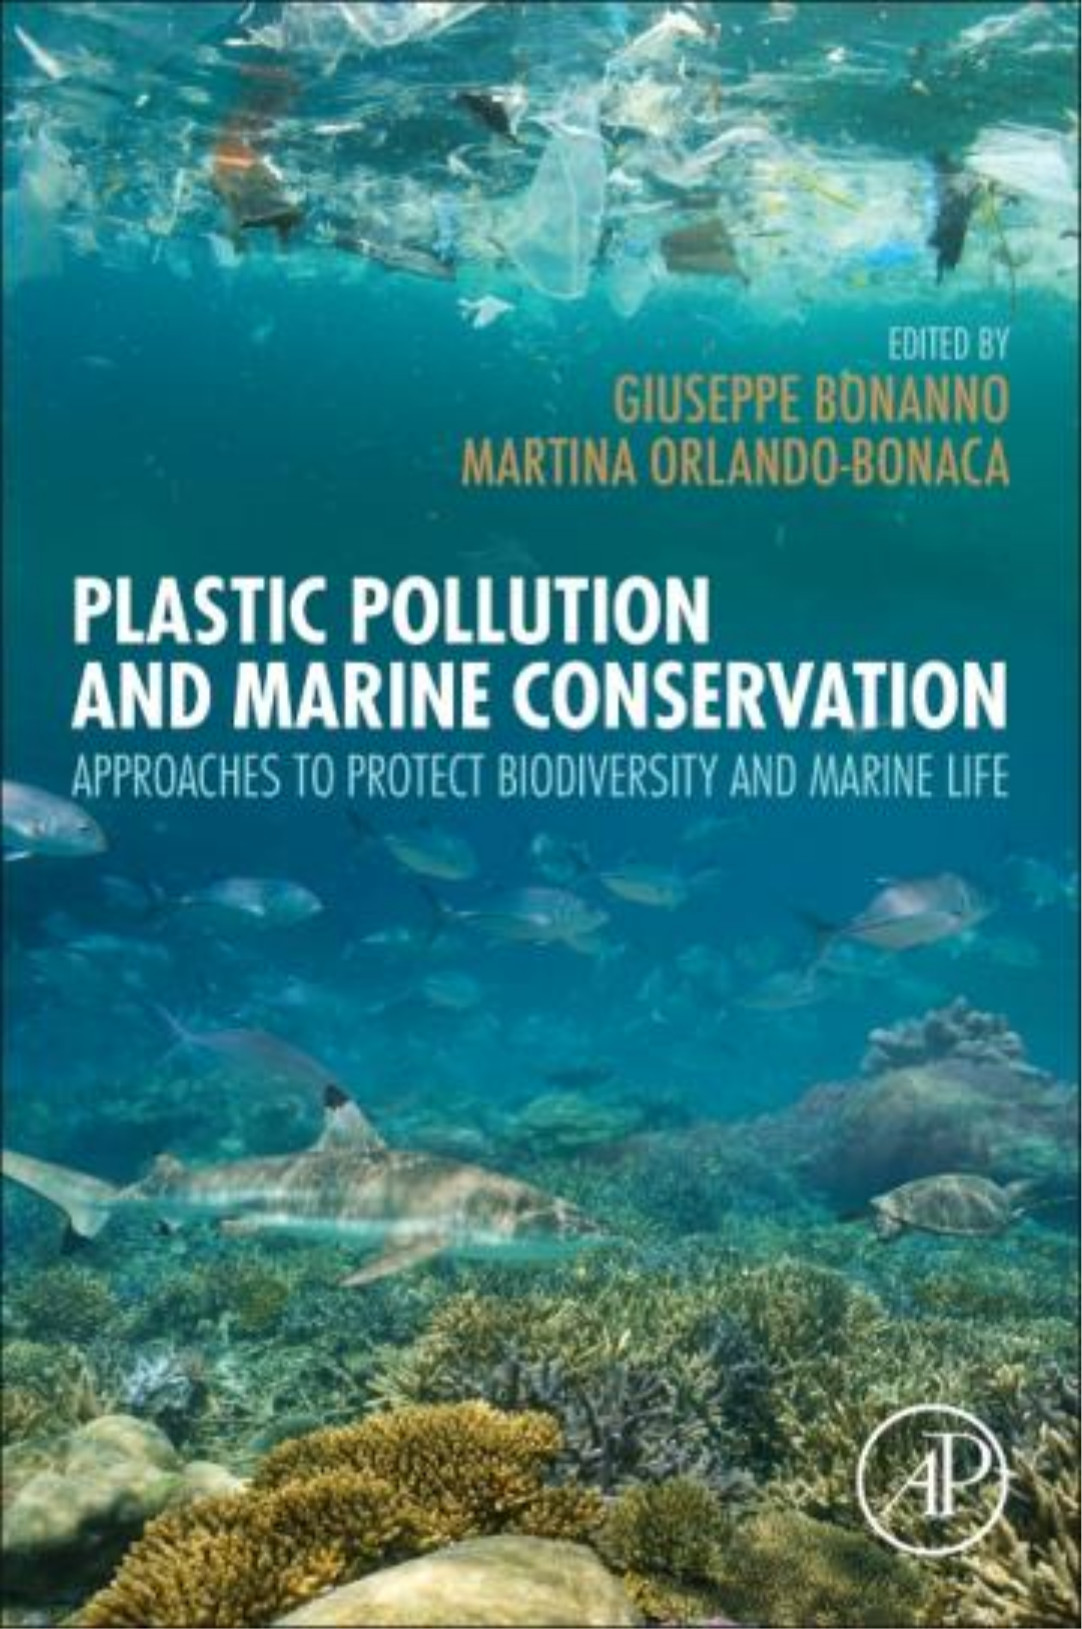 izsla-je-nova-znanstvena-monografija-o-razseznostih-problema-onesnazevanja-morskega-okolja-s-plastiko